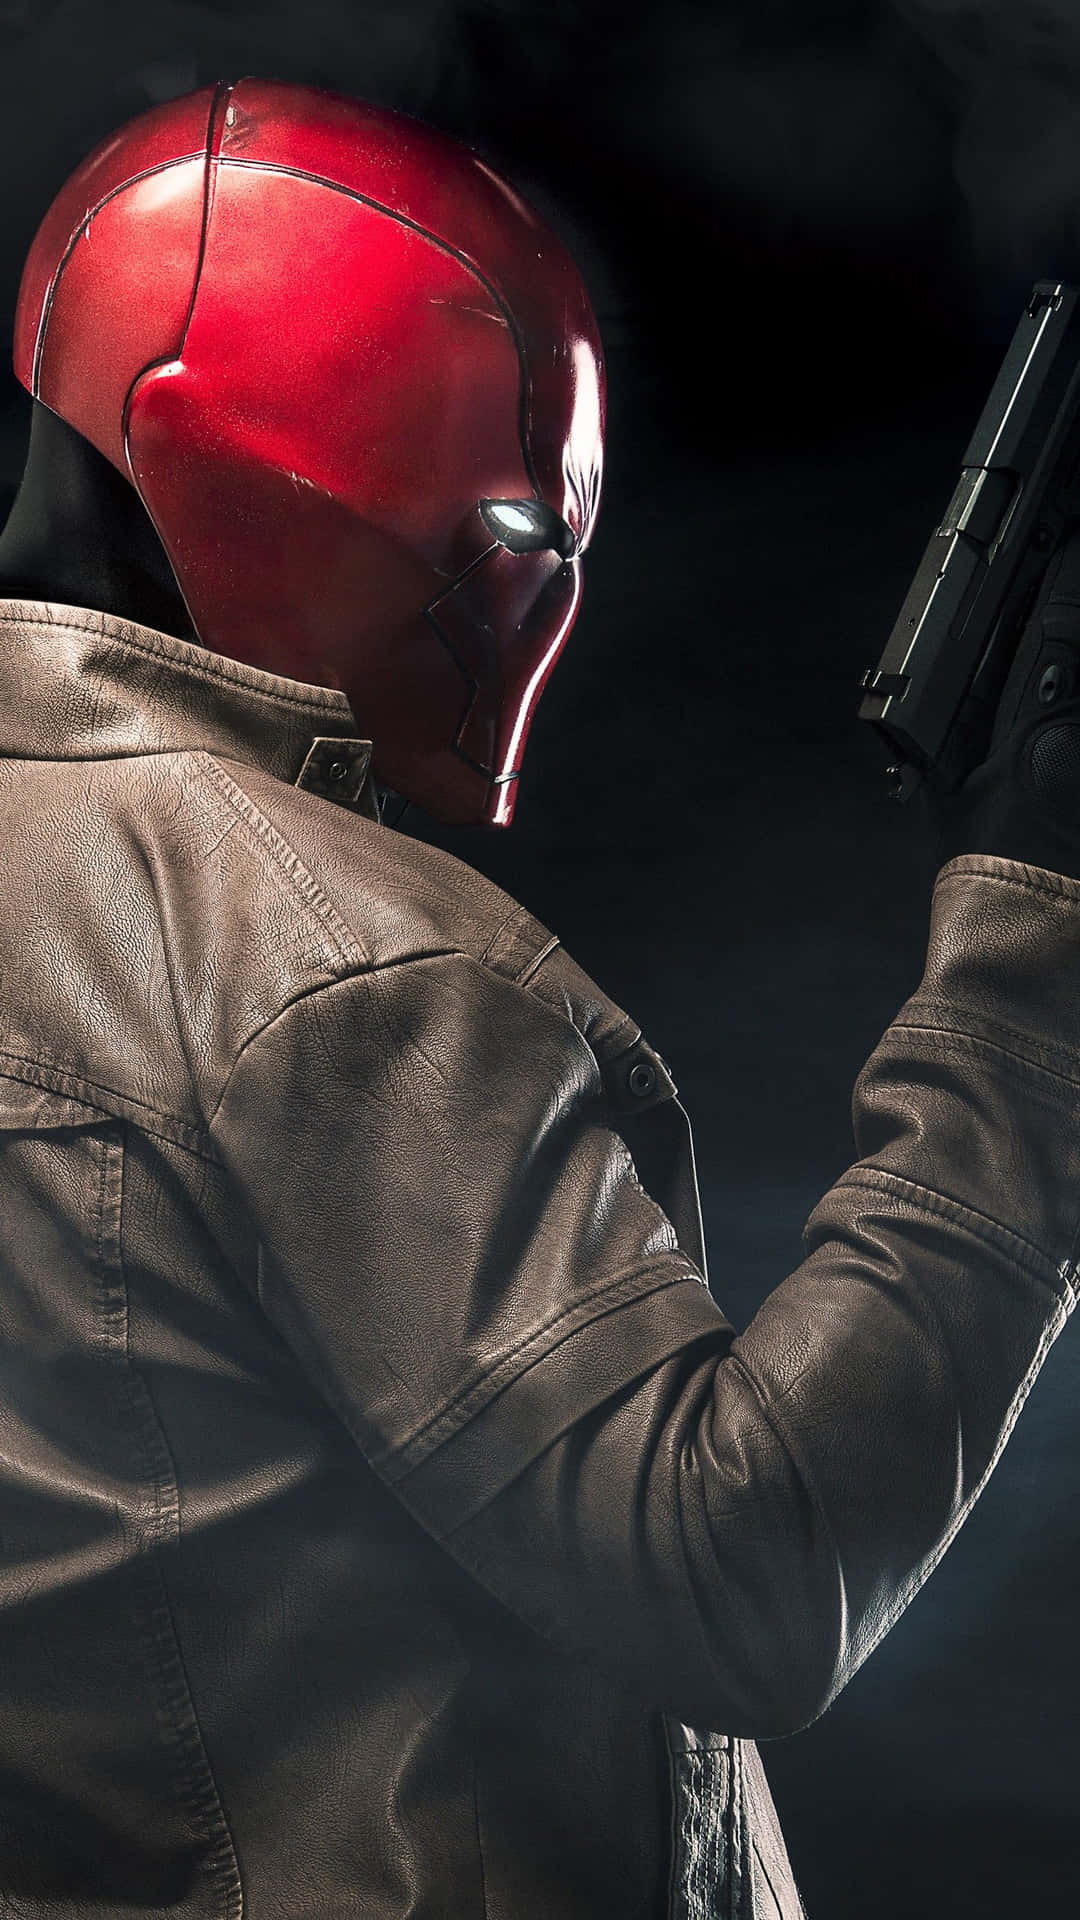 A Man In A Red Helmet Holding A Gun